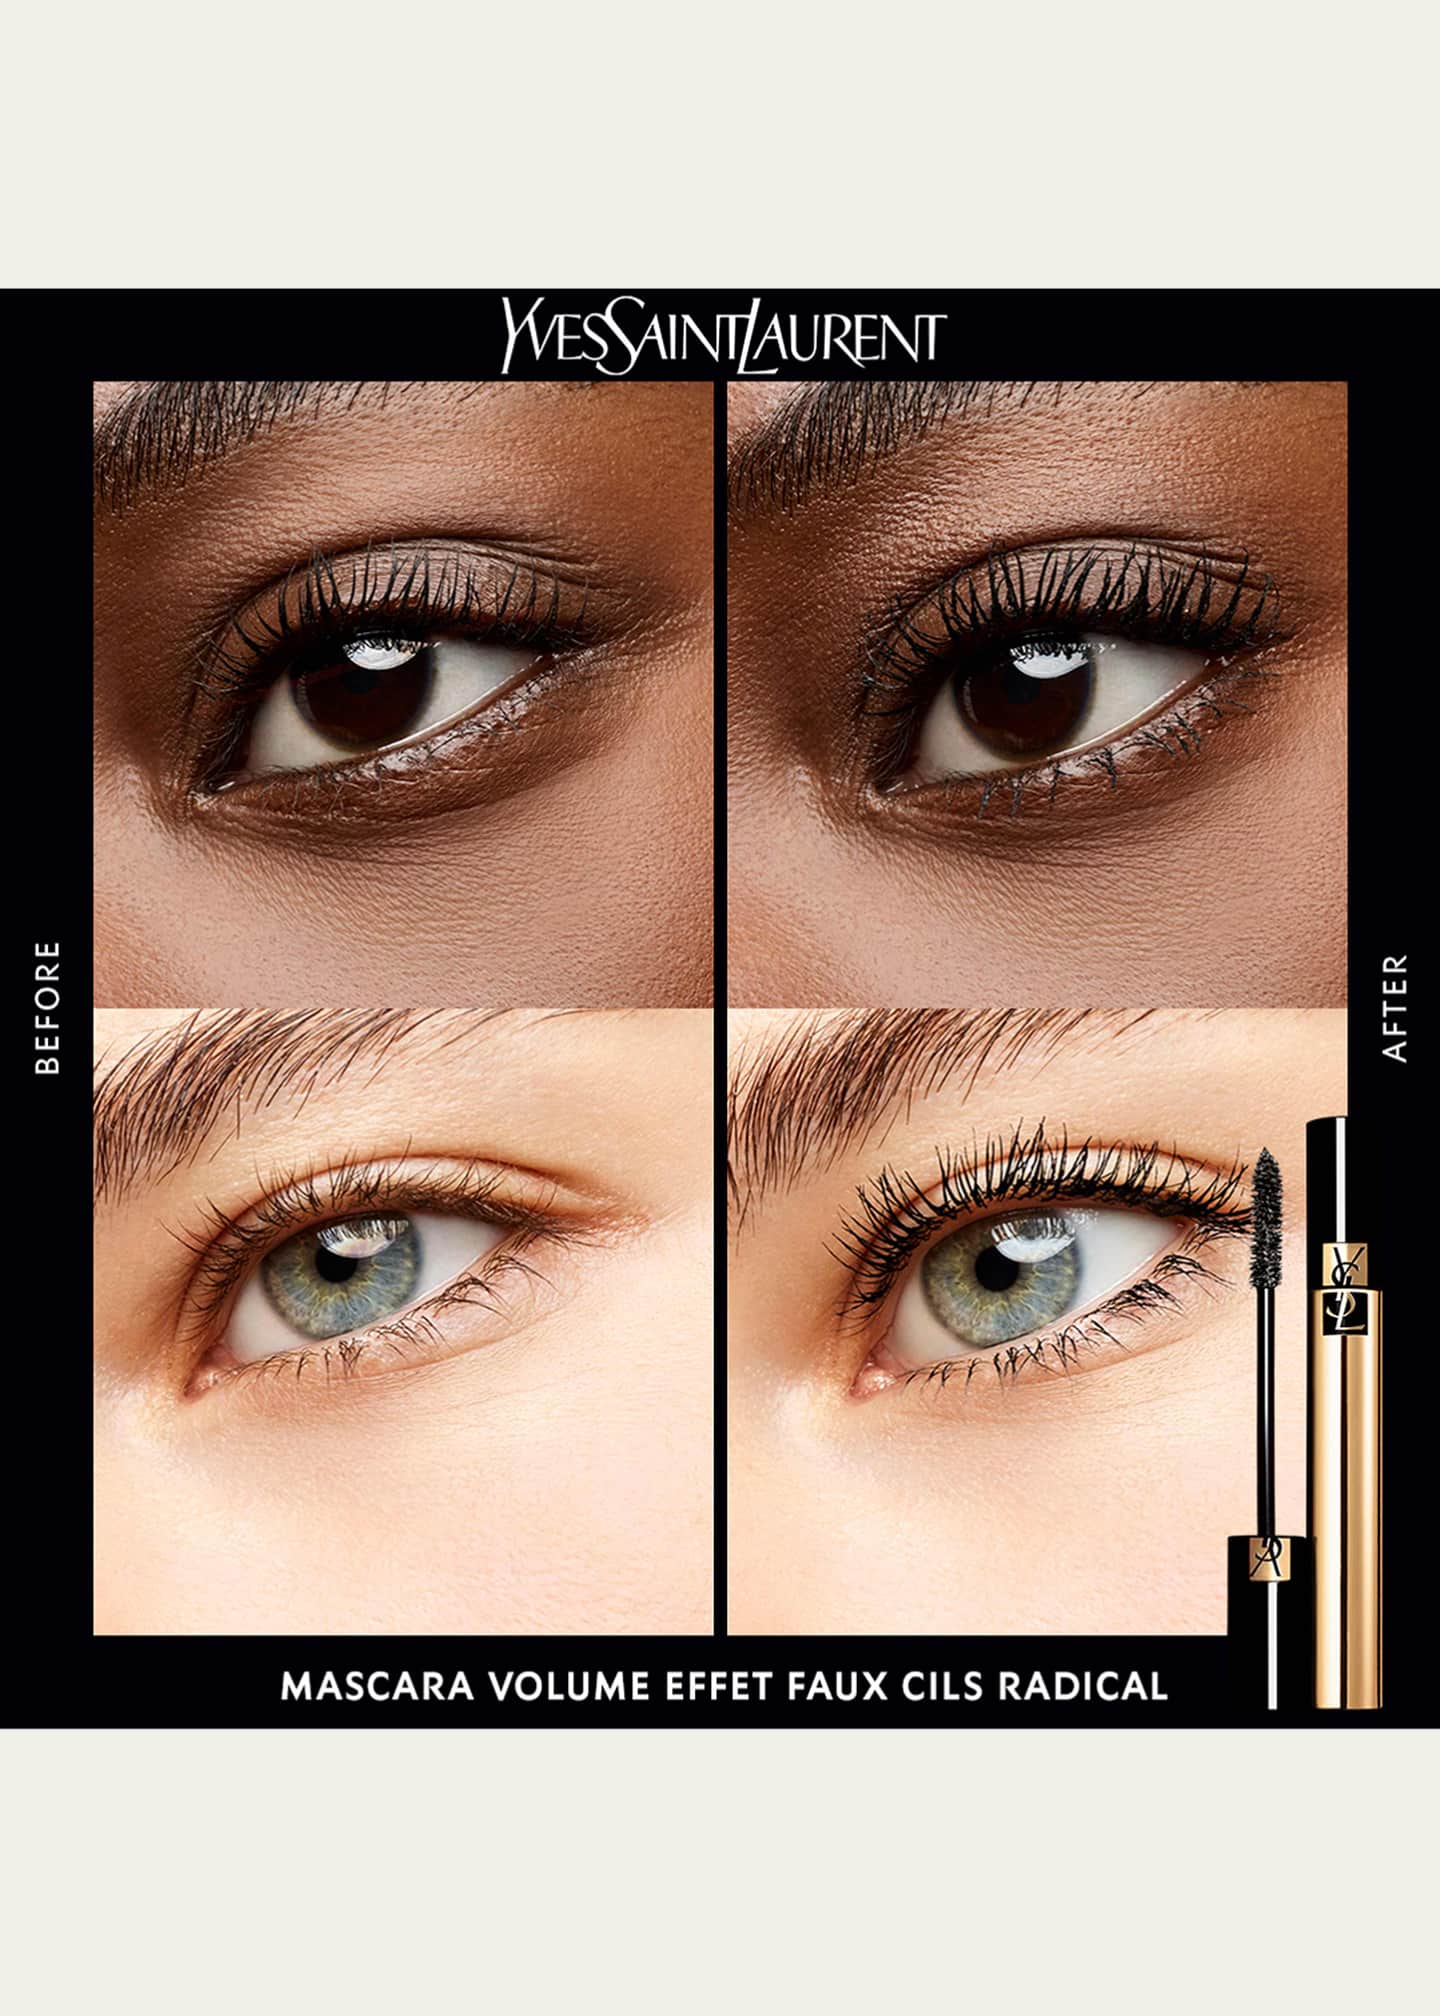 Yves Saint Laurent Mascara Volume Effet Faux Cils Volumizing Mascara